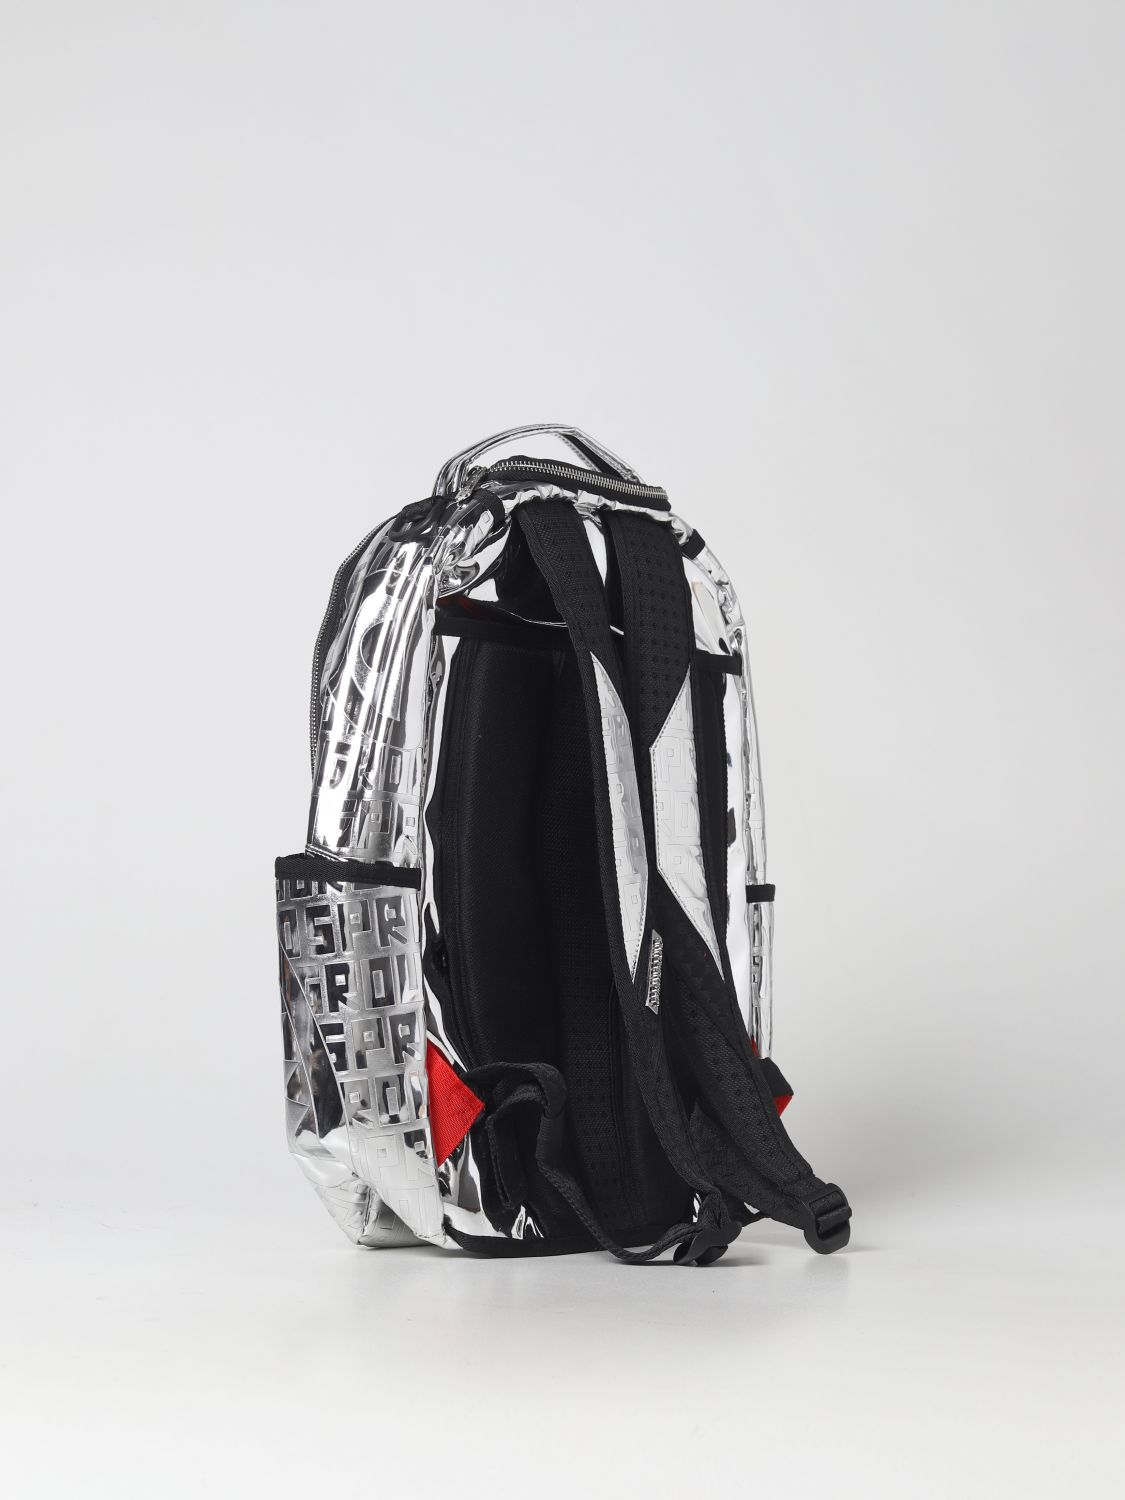 Sprayground Outlet: travel bag for man - Grey  Sprayground travel bag  910D5258NSZ online at